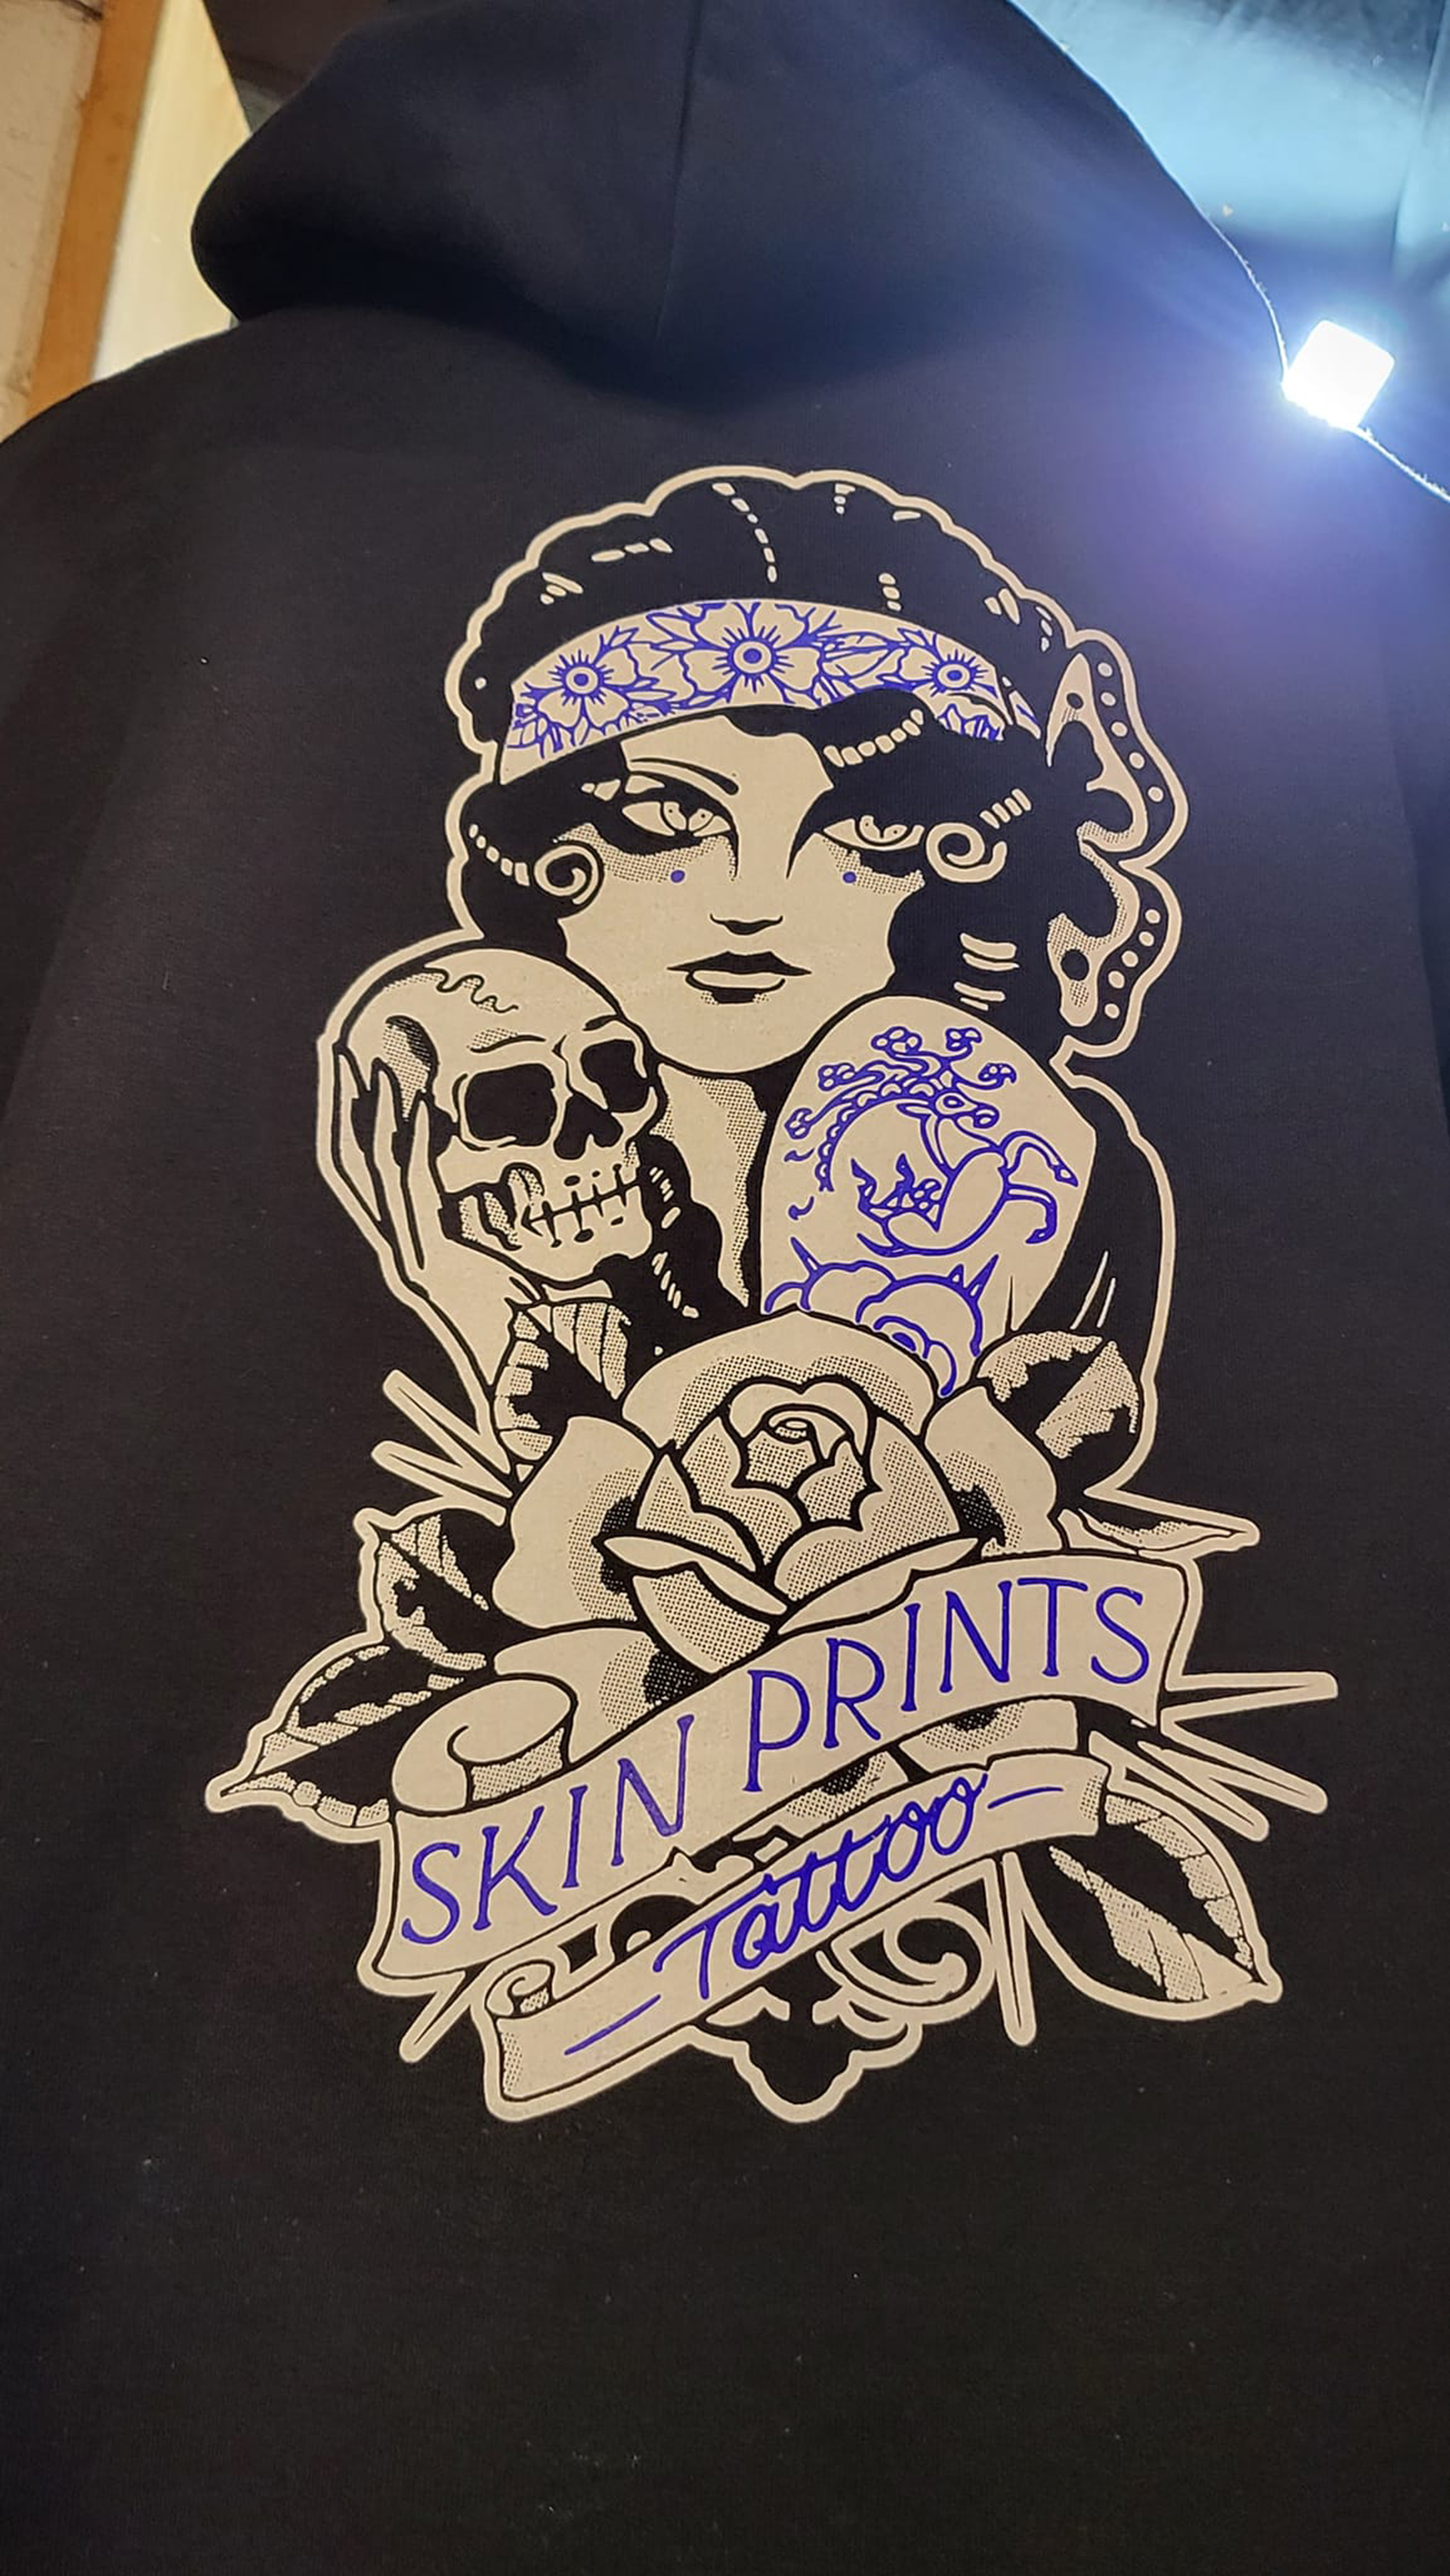 Skinprints custom printed t-shirt